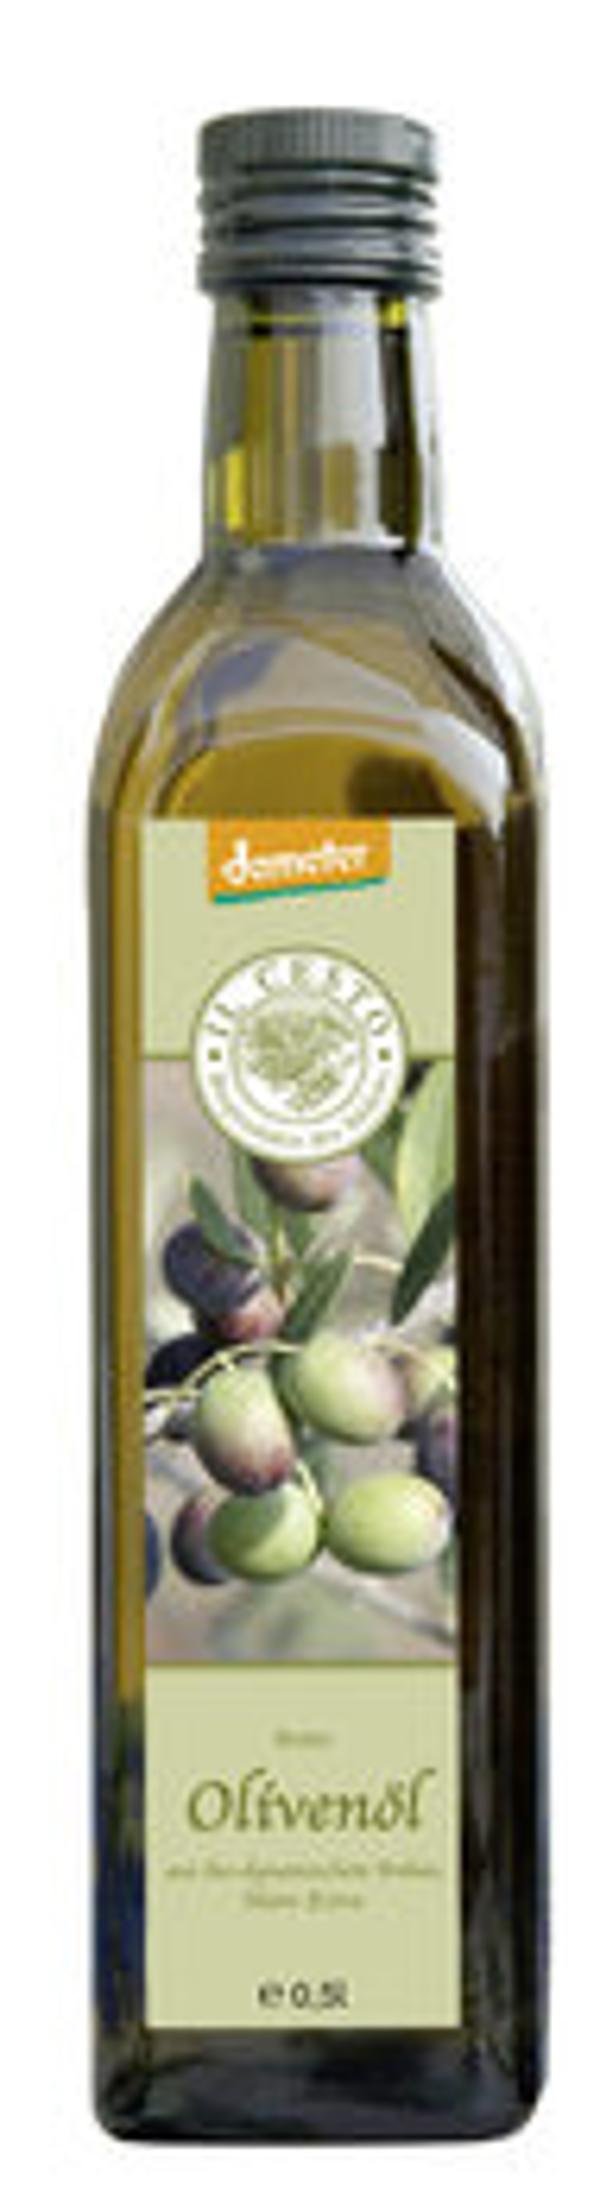 Produktfoto zu Olivenöl, 0,5 l